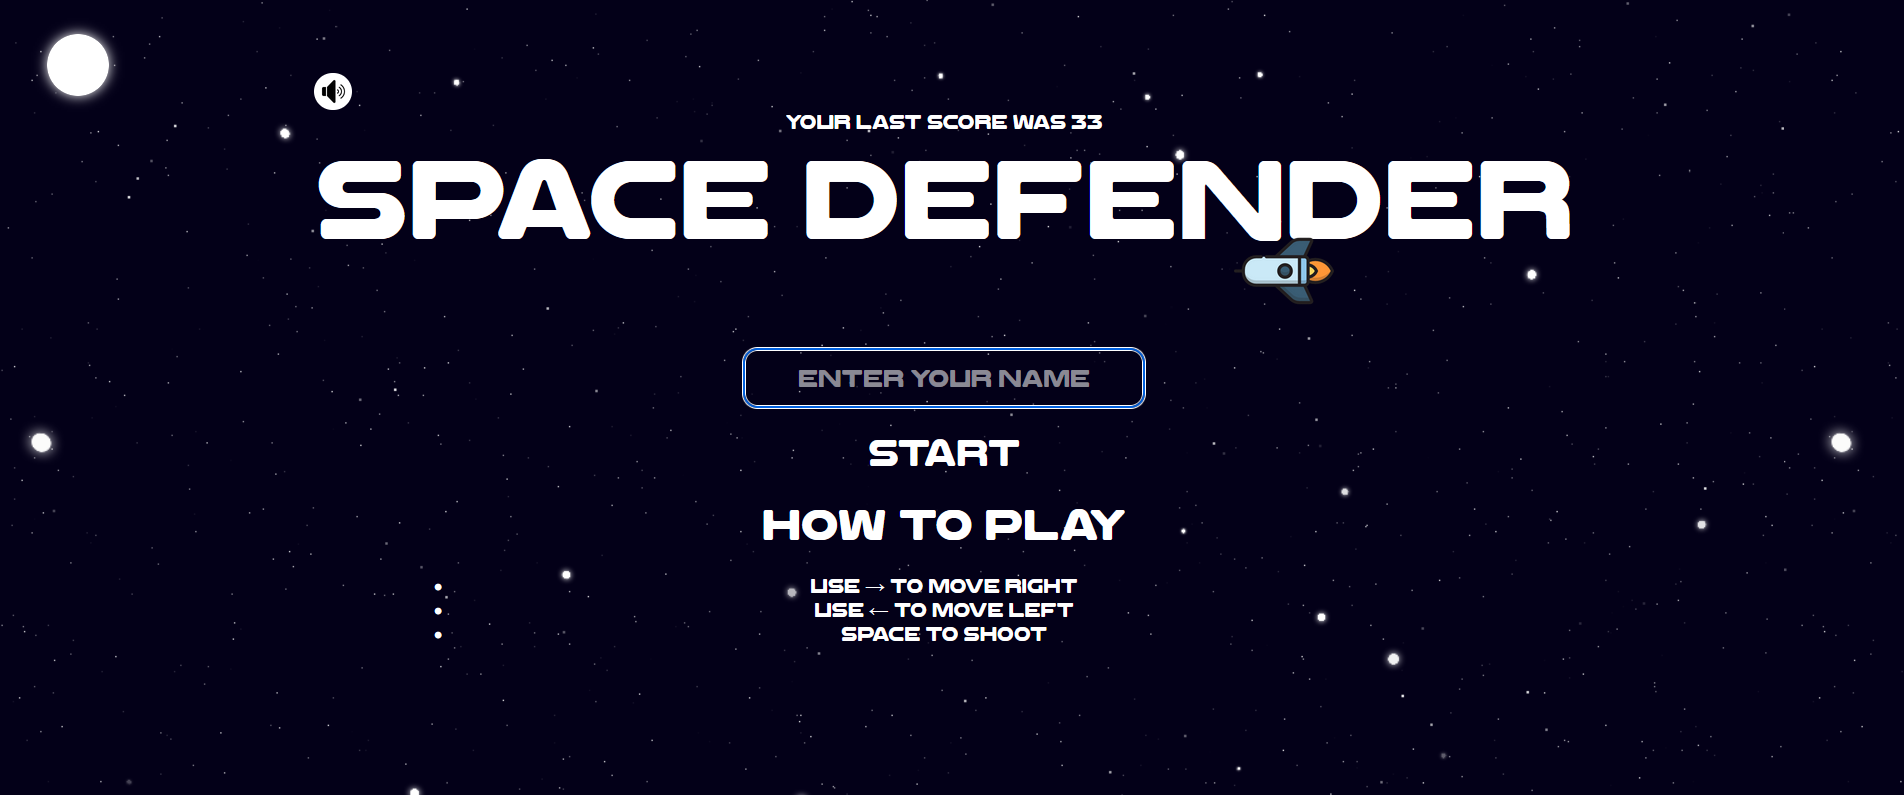 Screenshot of space defender game